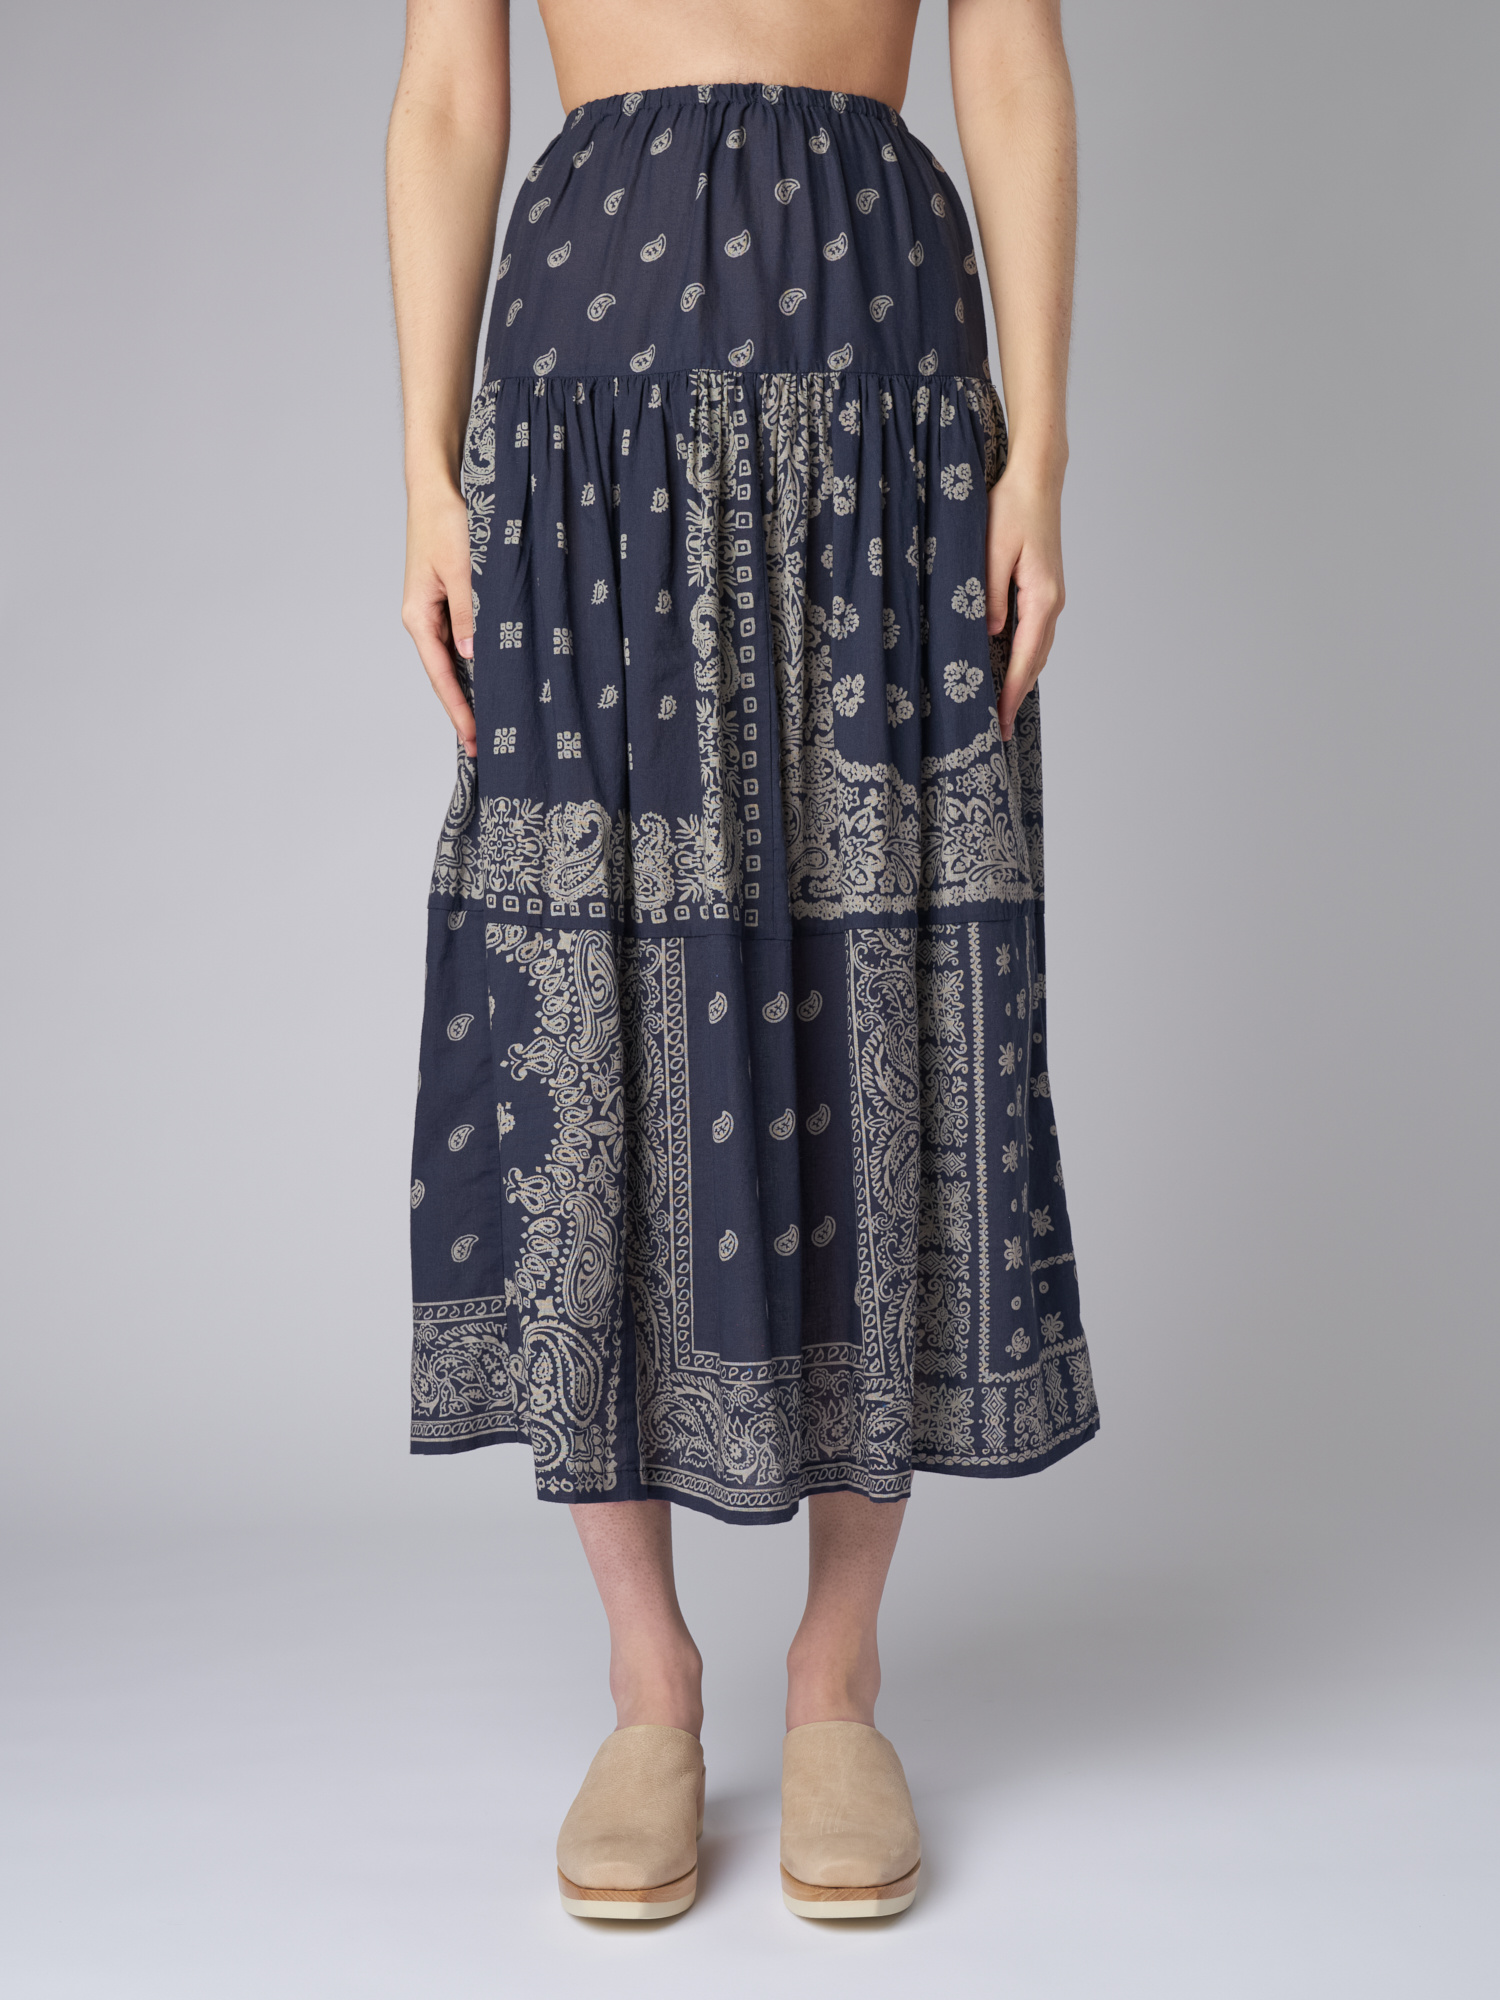 The Aura Skirt By Papercut Pattens - Sew Tessuti Blog